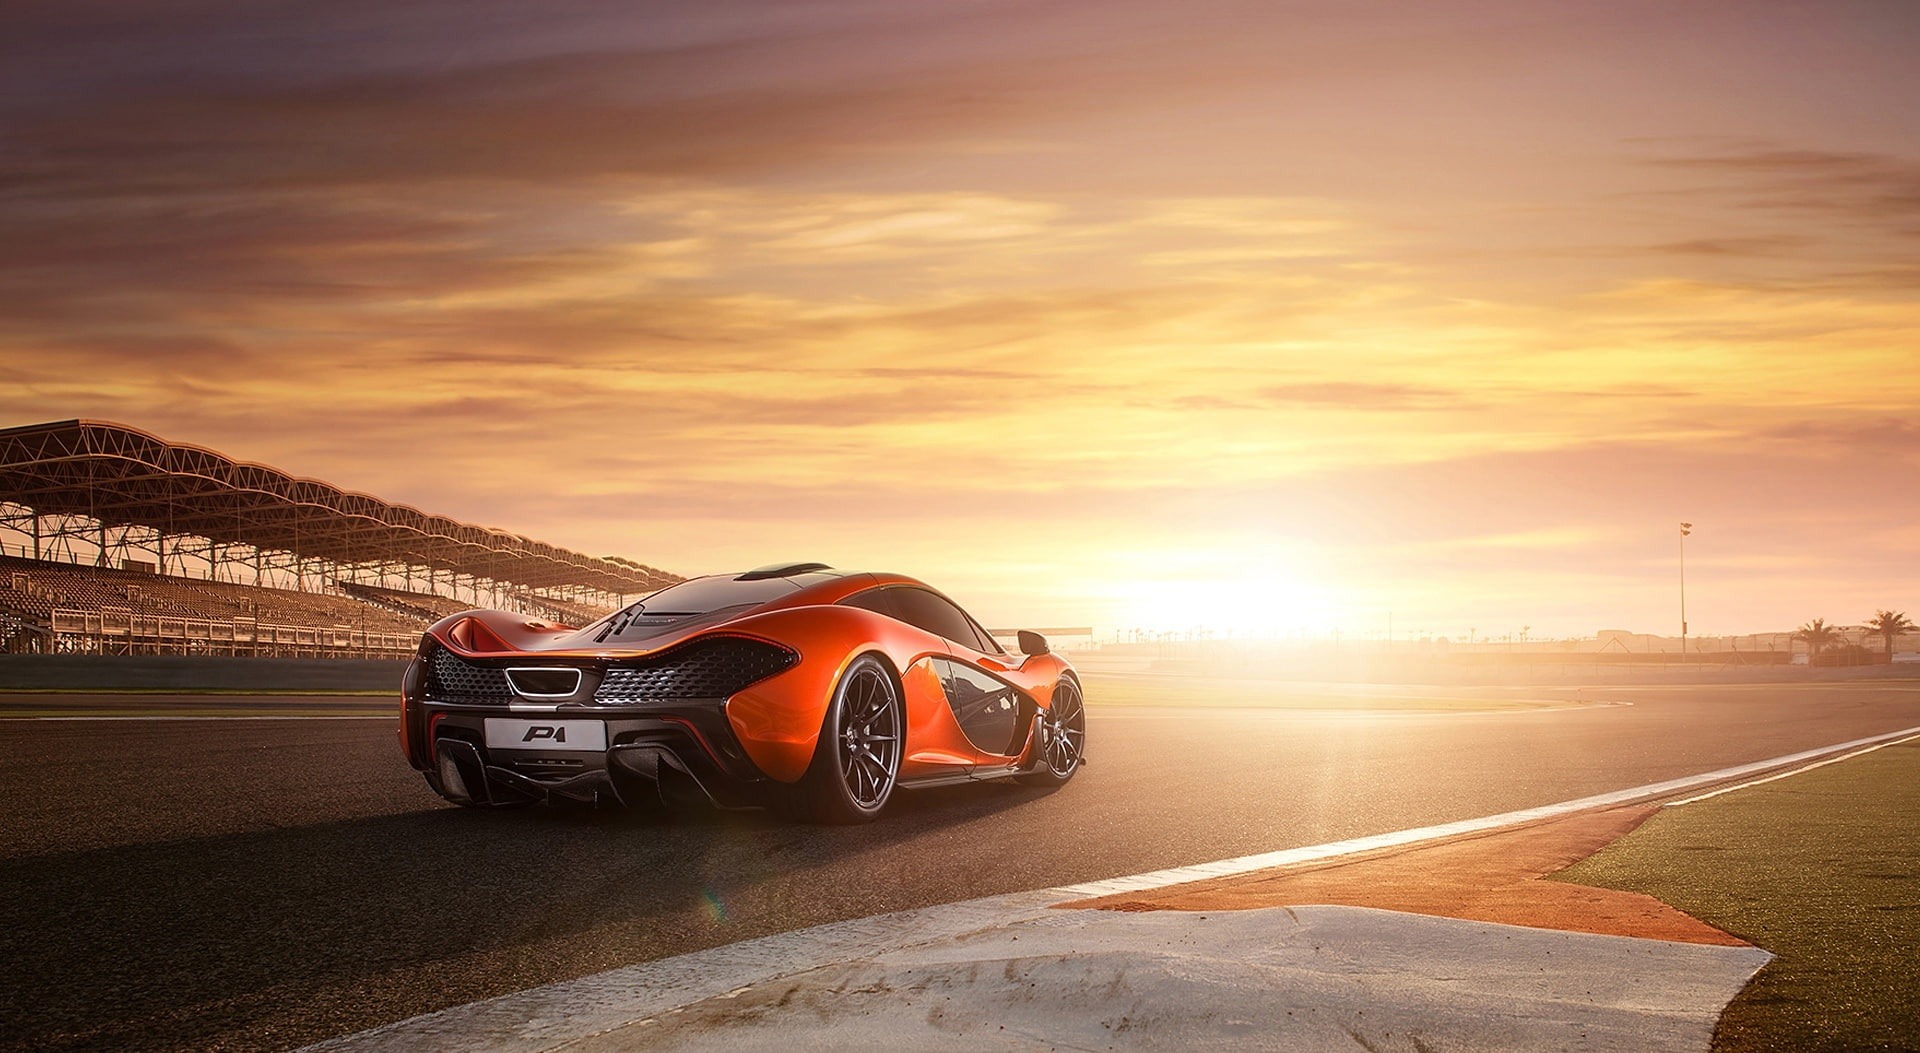 2014 McLaren P1 RaceTrack, orange sports car, Cars, Supercars